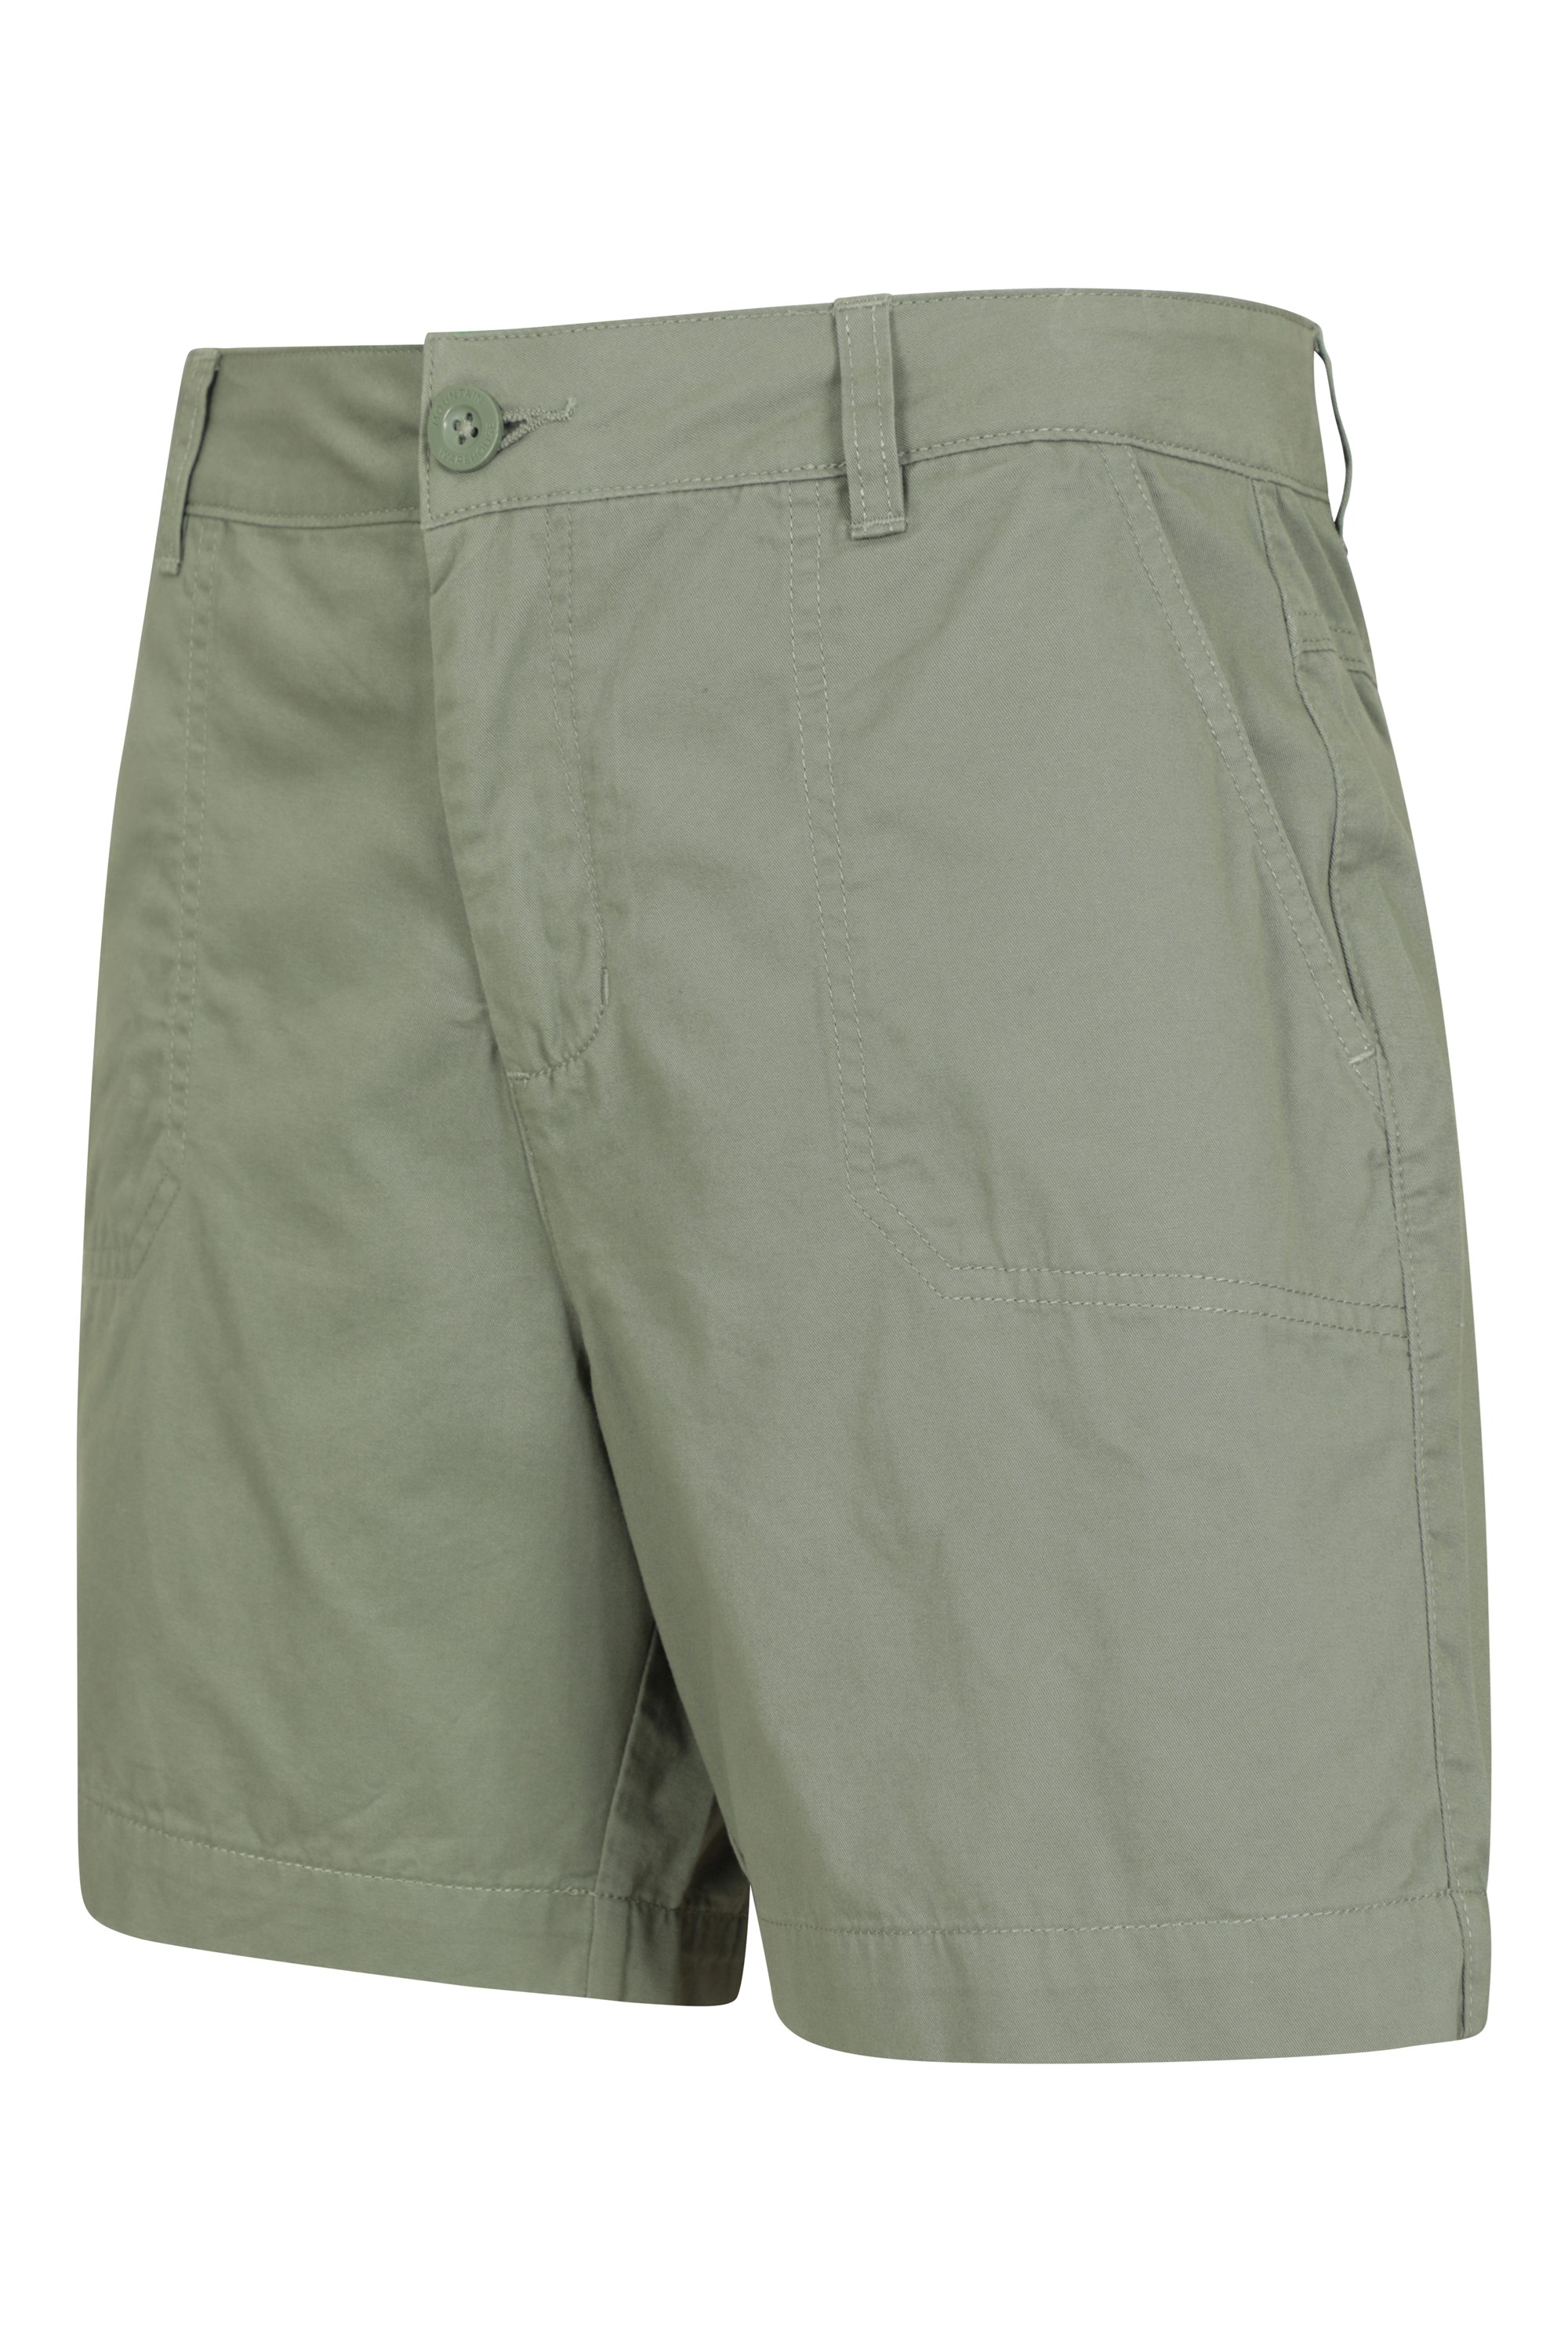 Mountain Warehouse Mountain Warehouse Bayside Women's Shorts Ladies Comfort 100% Cotton Half Pants 